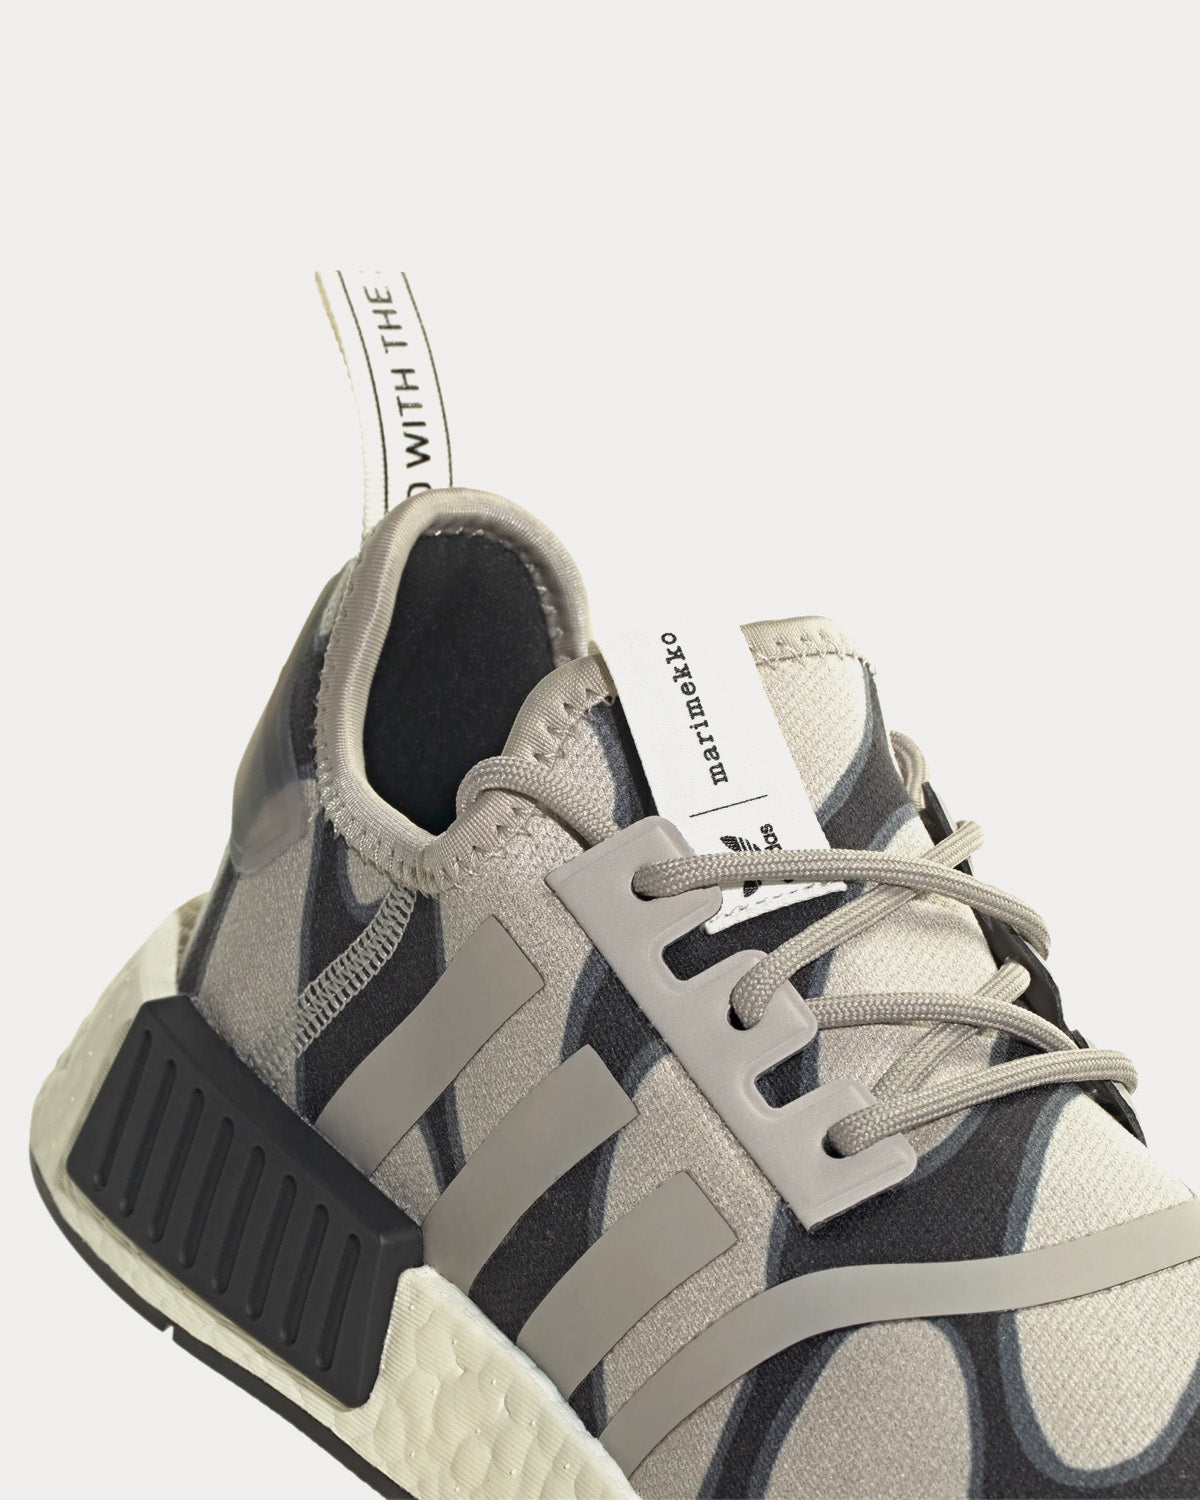 Adidas x Marimekko - NMD_R1 Core Black / Off White / Grey Six Low Top Sneakers